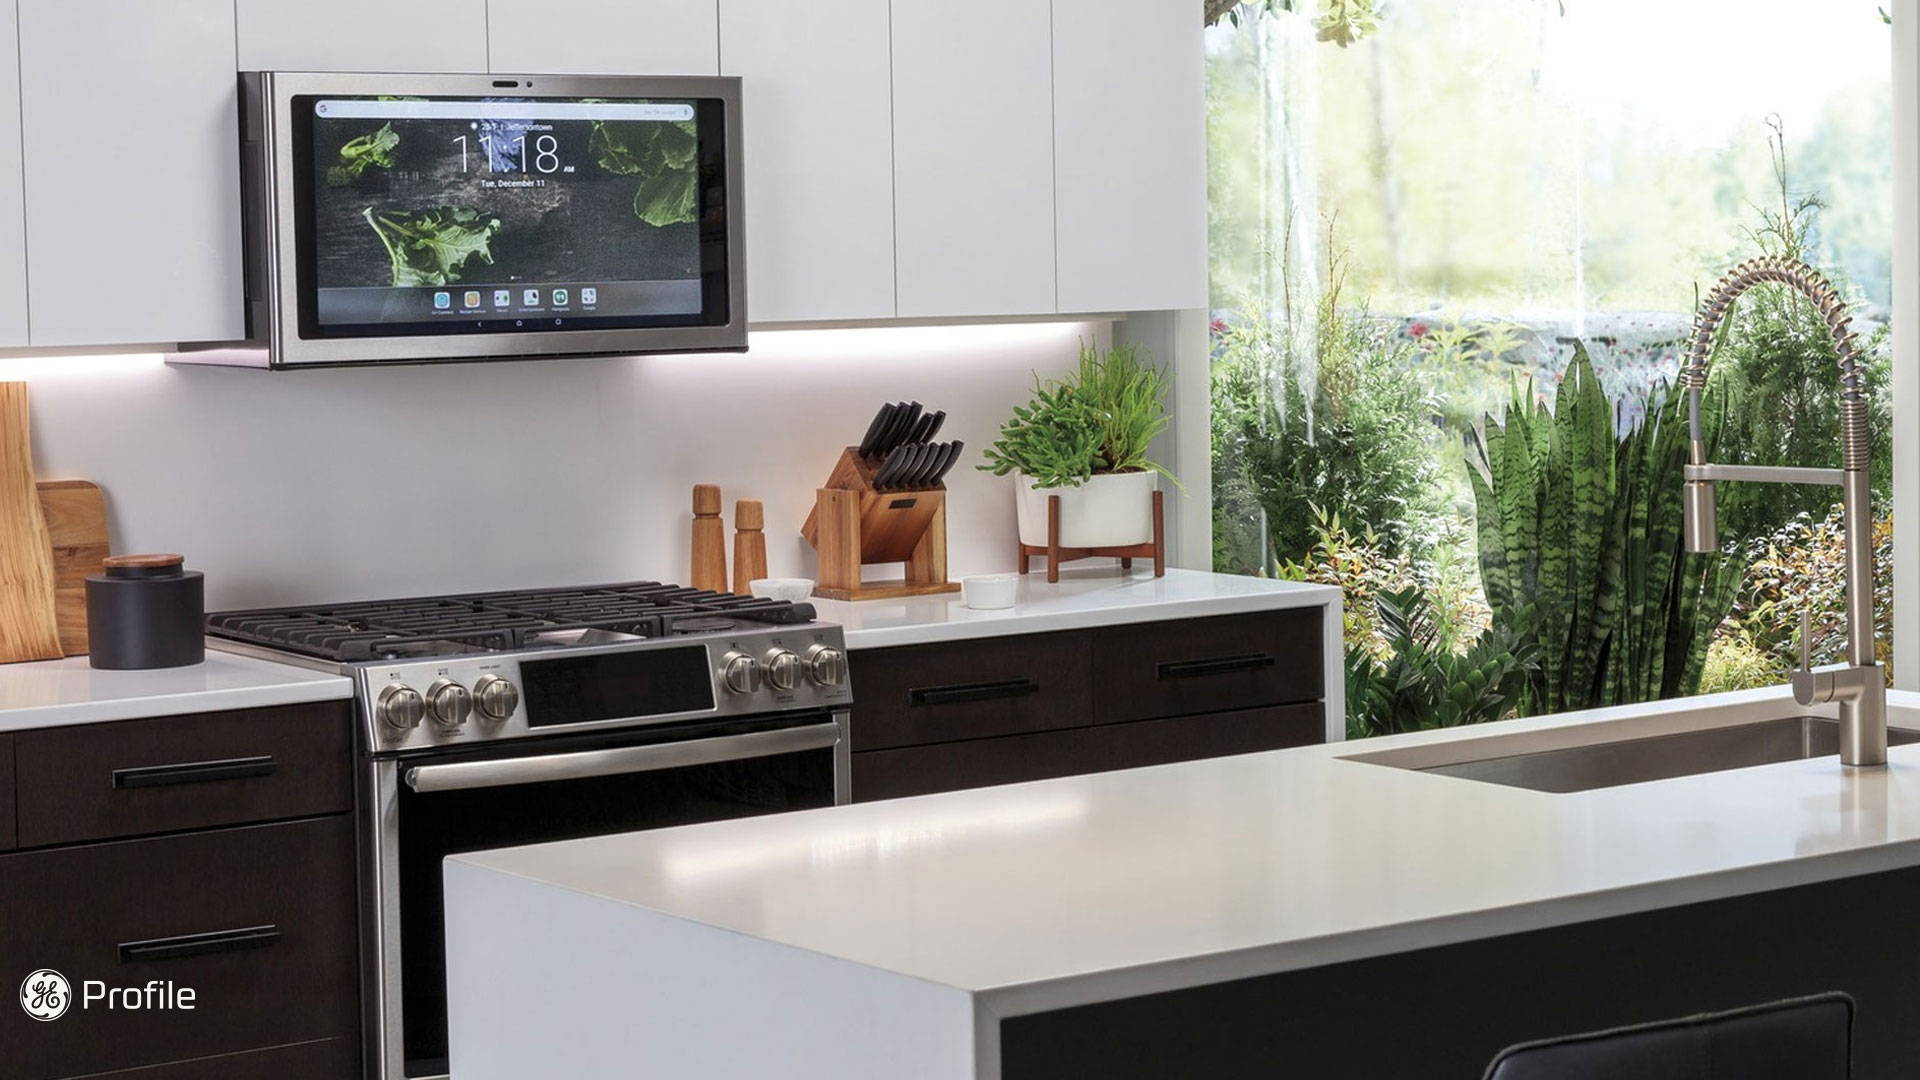 GE Profile Smart Kitchen with Kitchen Hub